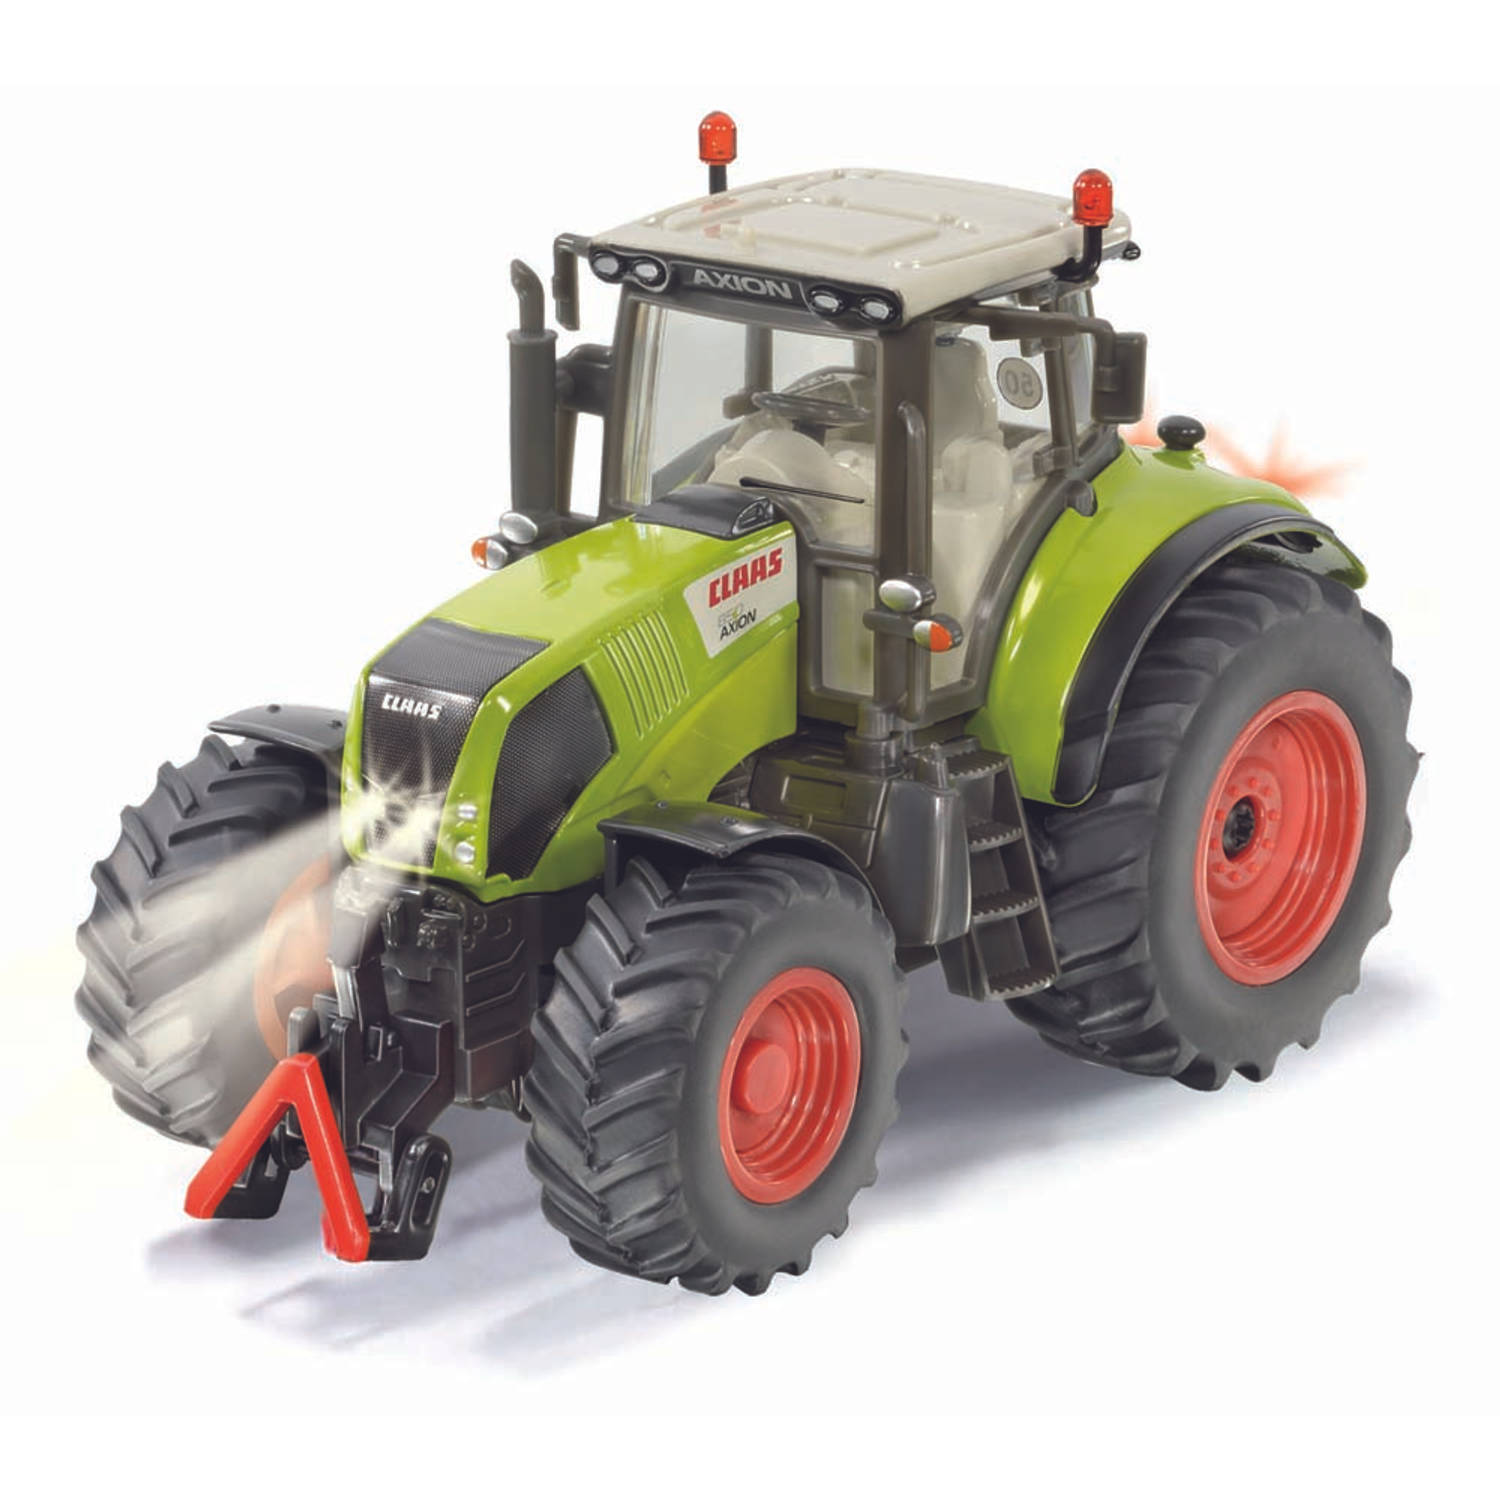 Siku Claas Axion 850 tractor met remote control